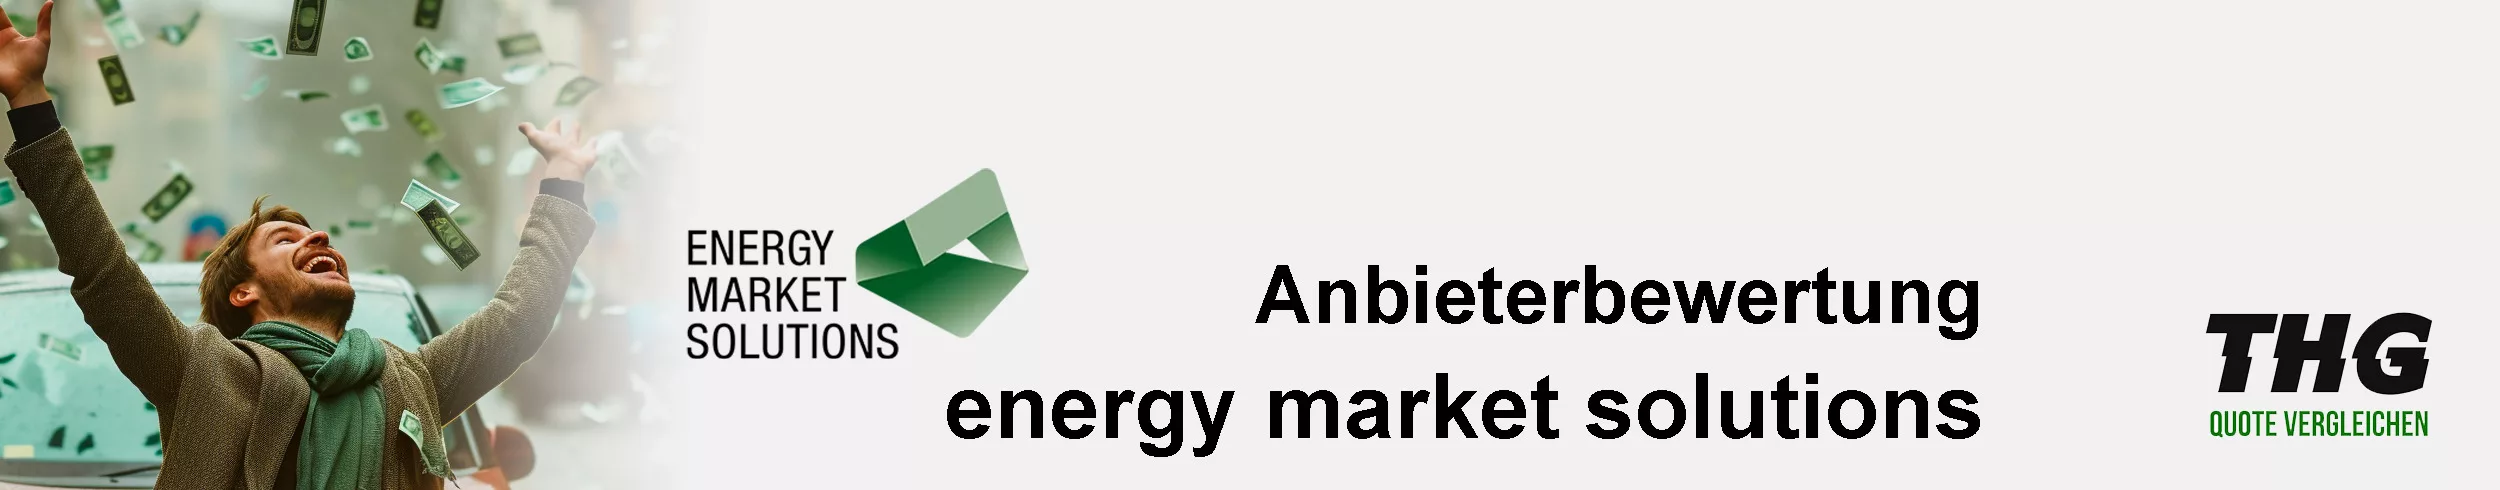 energy market solutions thg quote erfahrungen